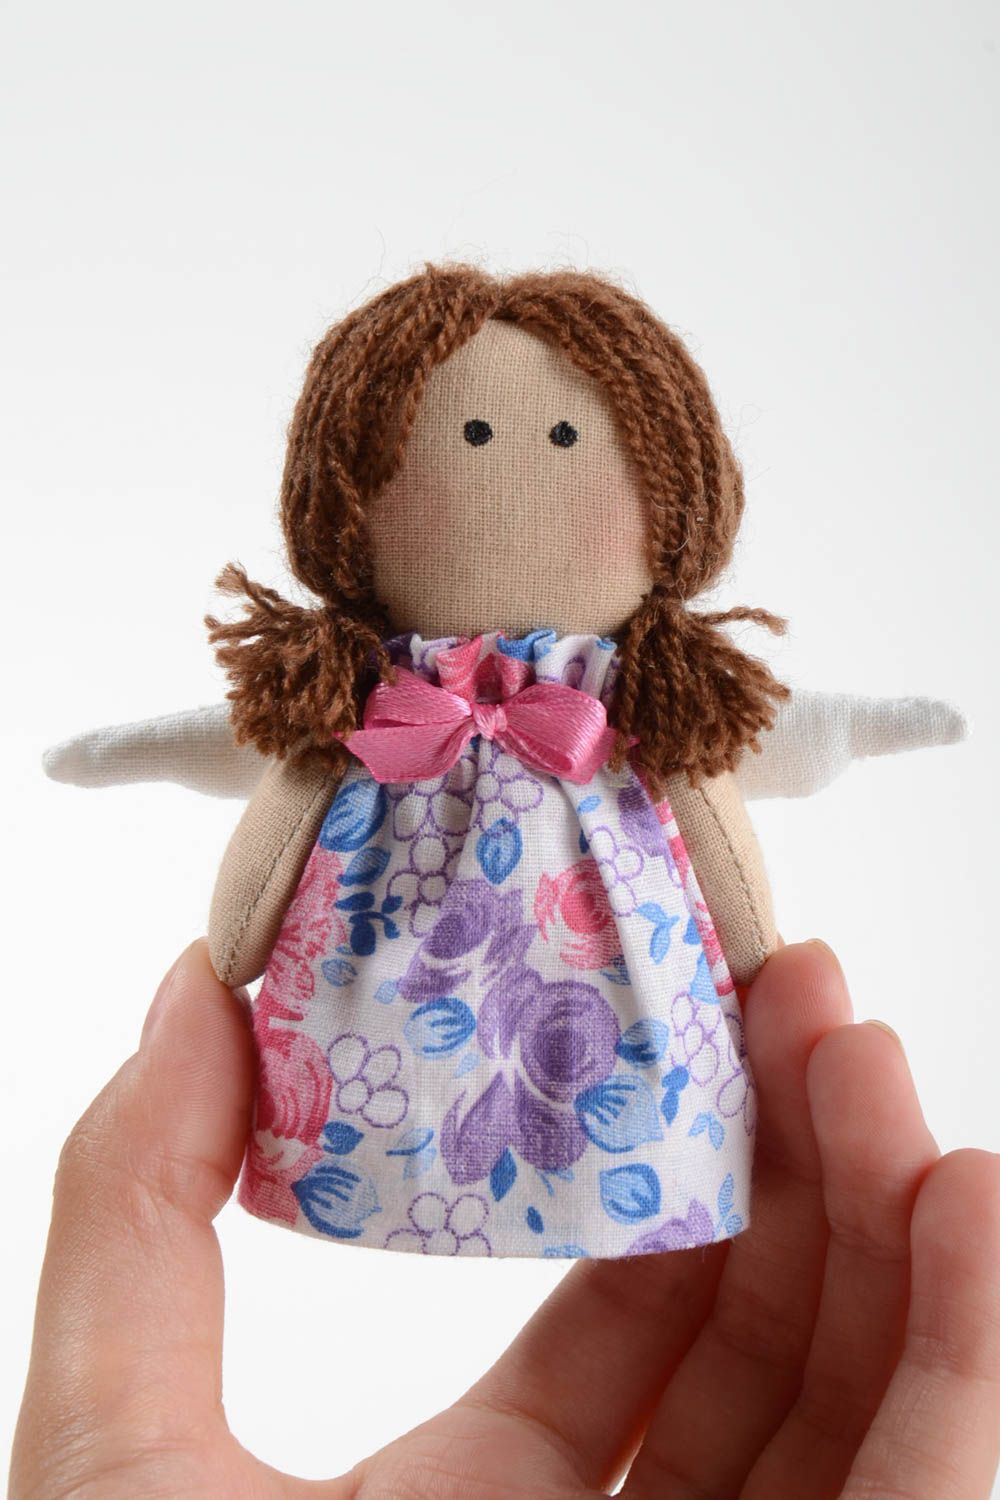 Small homemade fabric interior doll soft rag doll decorative toys gift ideas photo 2